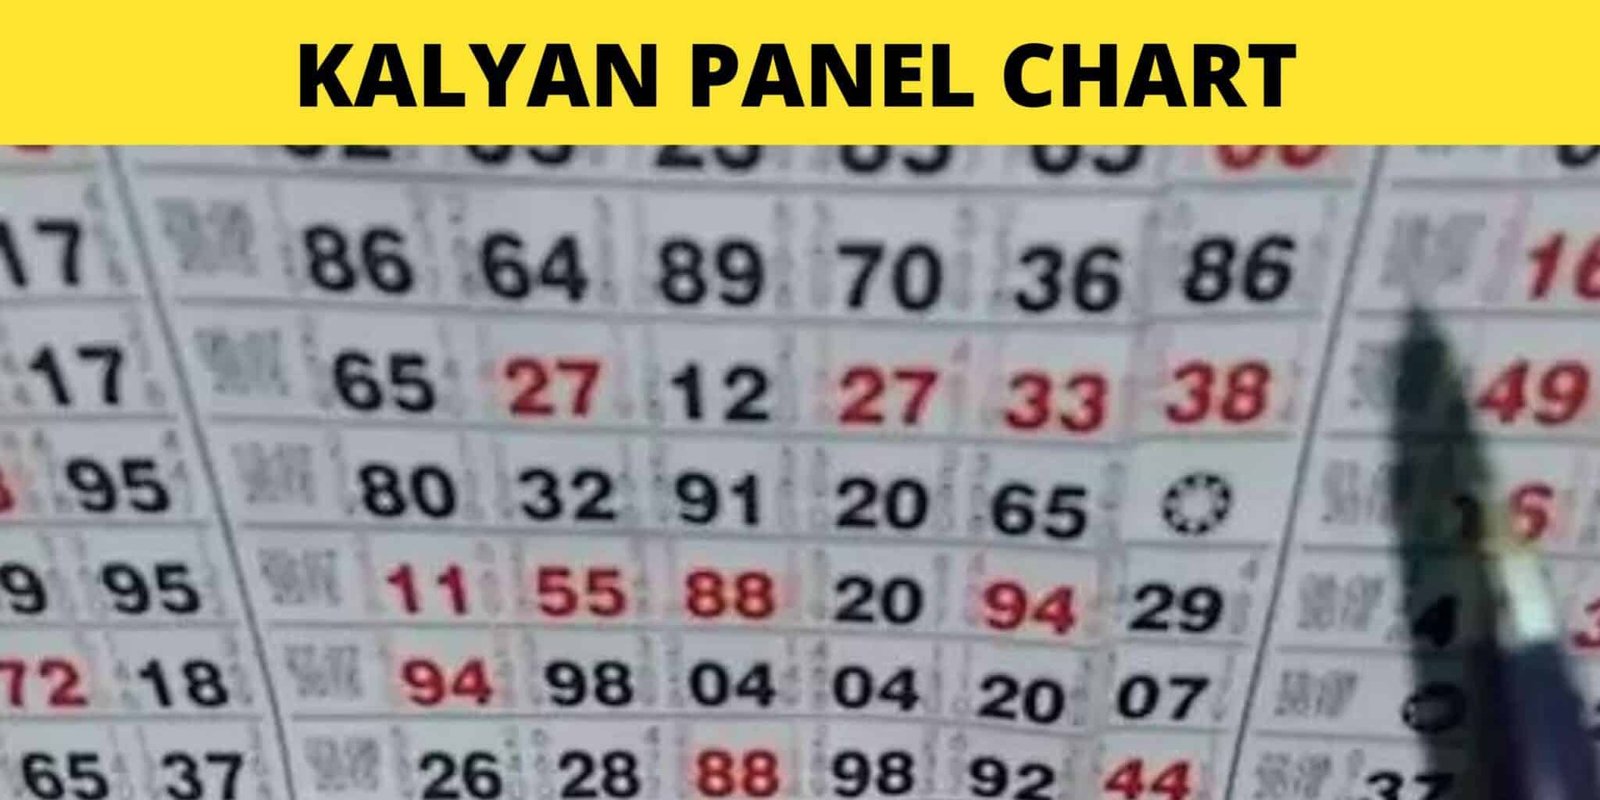 Kalyan Panel Chart 04 August कल्याण पैनल चार्ट निकालने का तरीका क्या